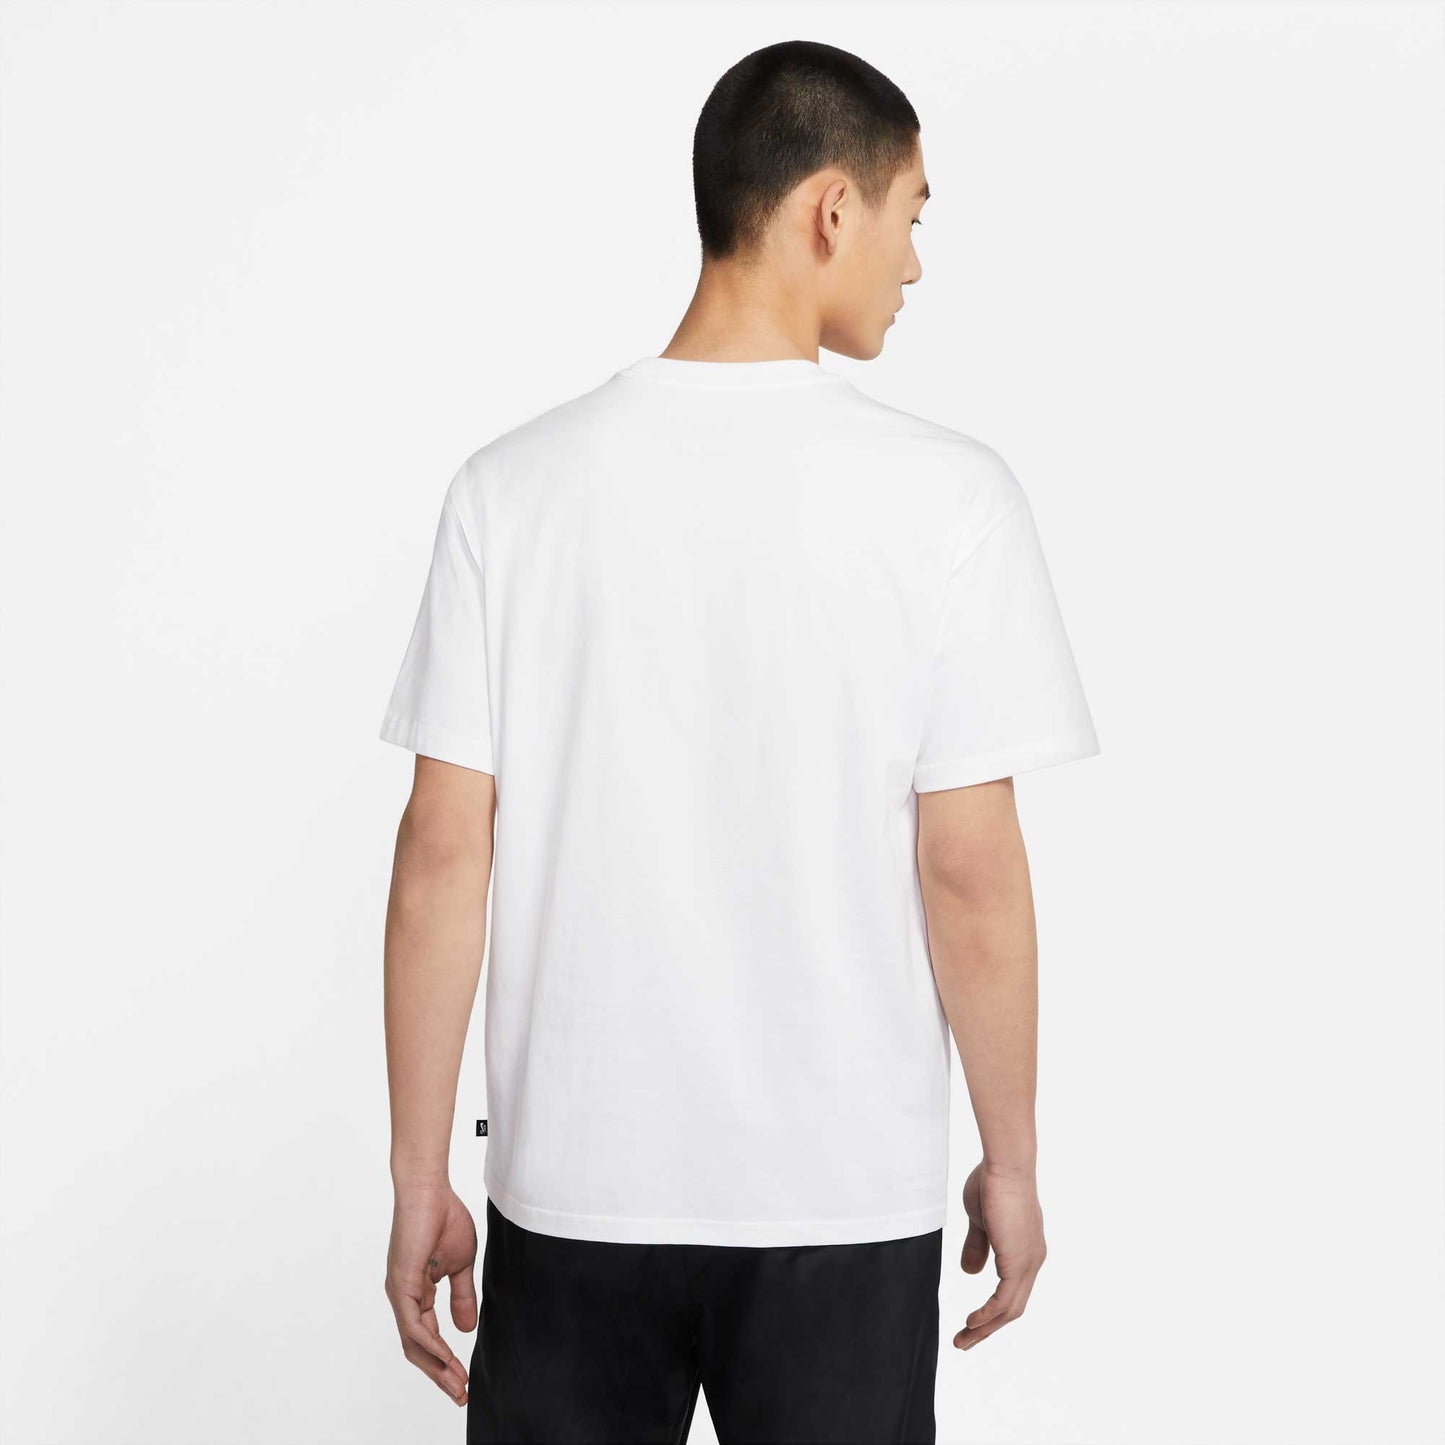 Nike SB Skate t-shirt, white - Tiki Room Skateboards - 2